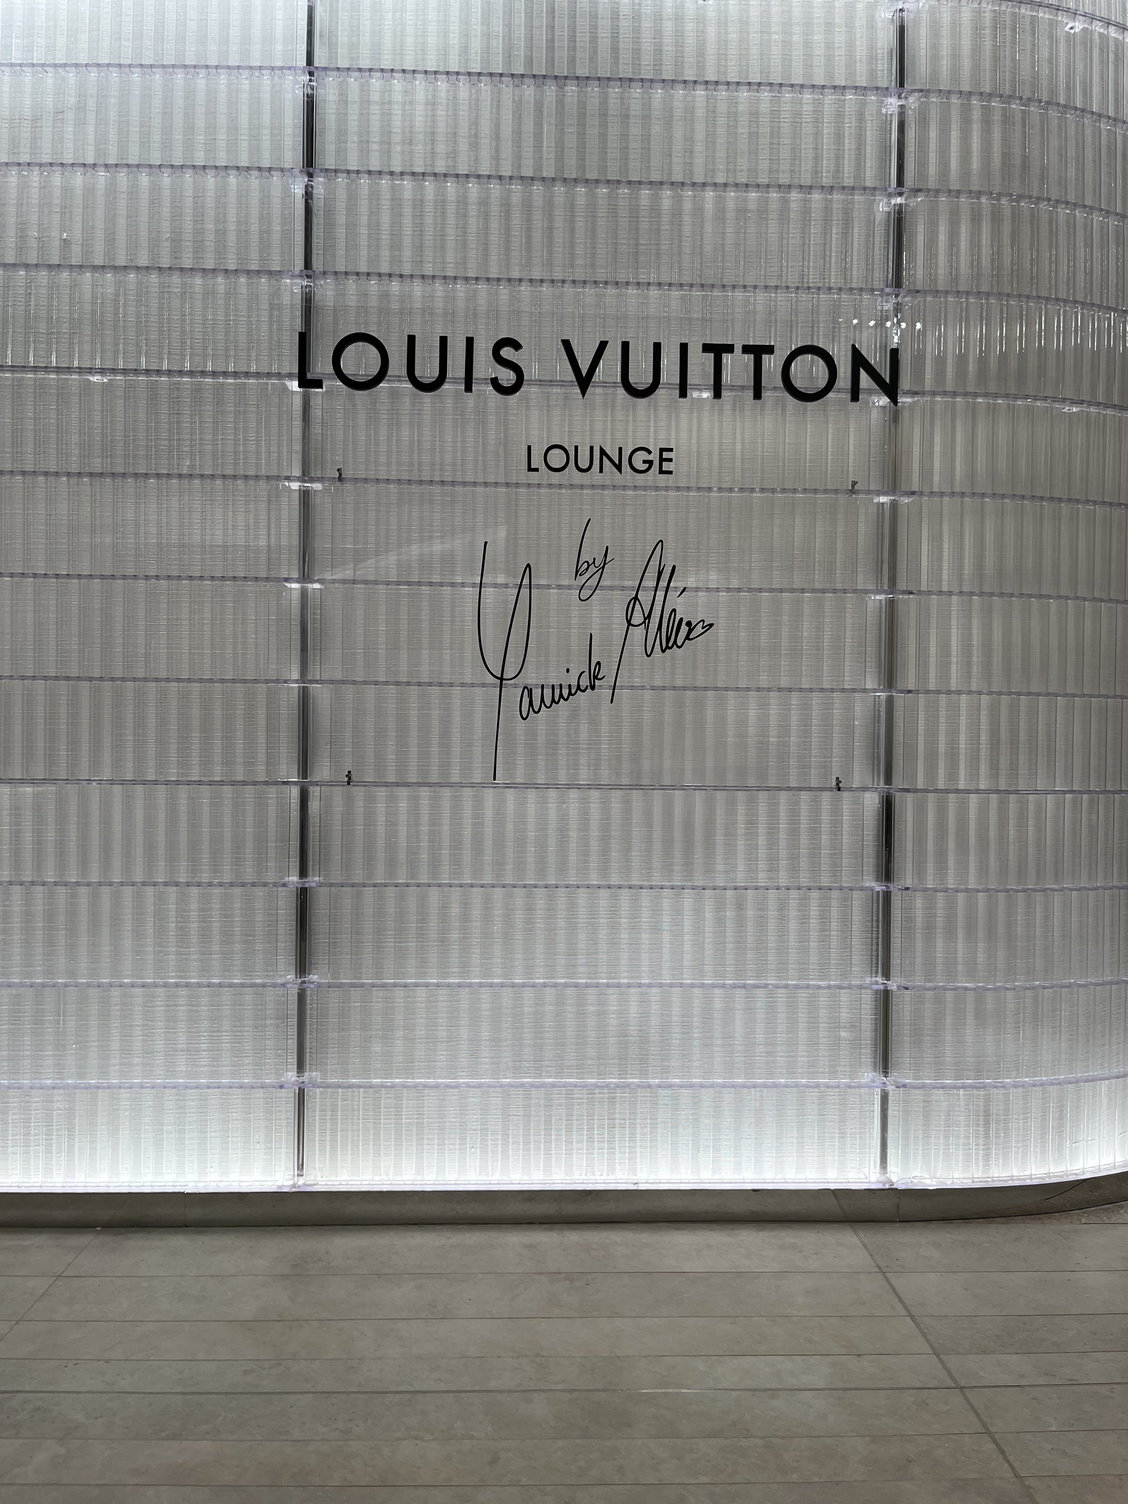 Visiting Qatar Airways' exclusive Doha Louis Vuitton Lounge